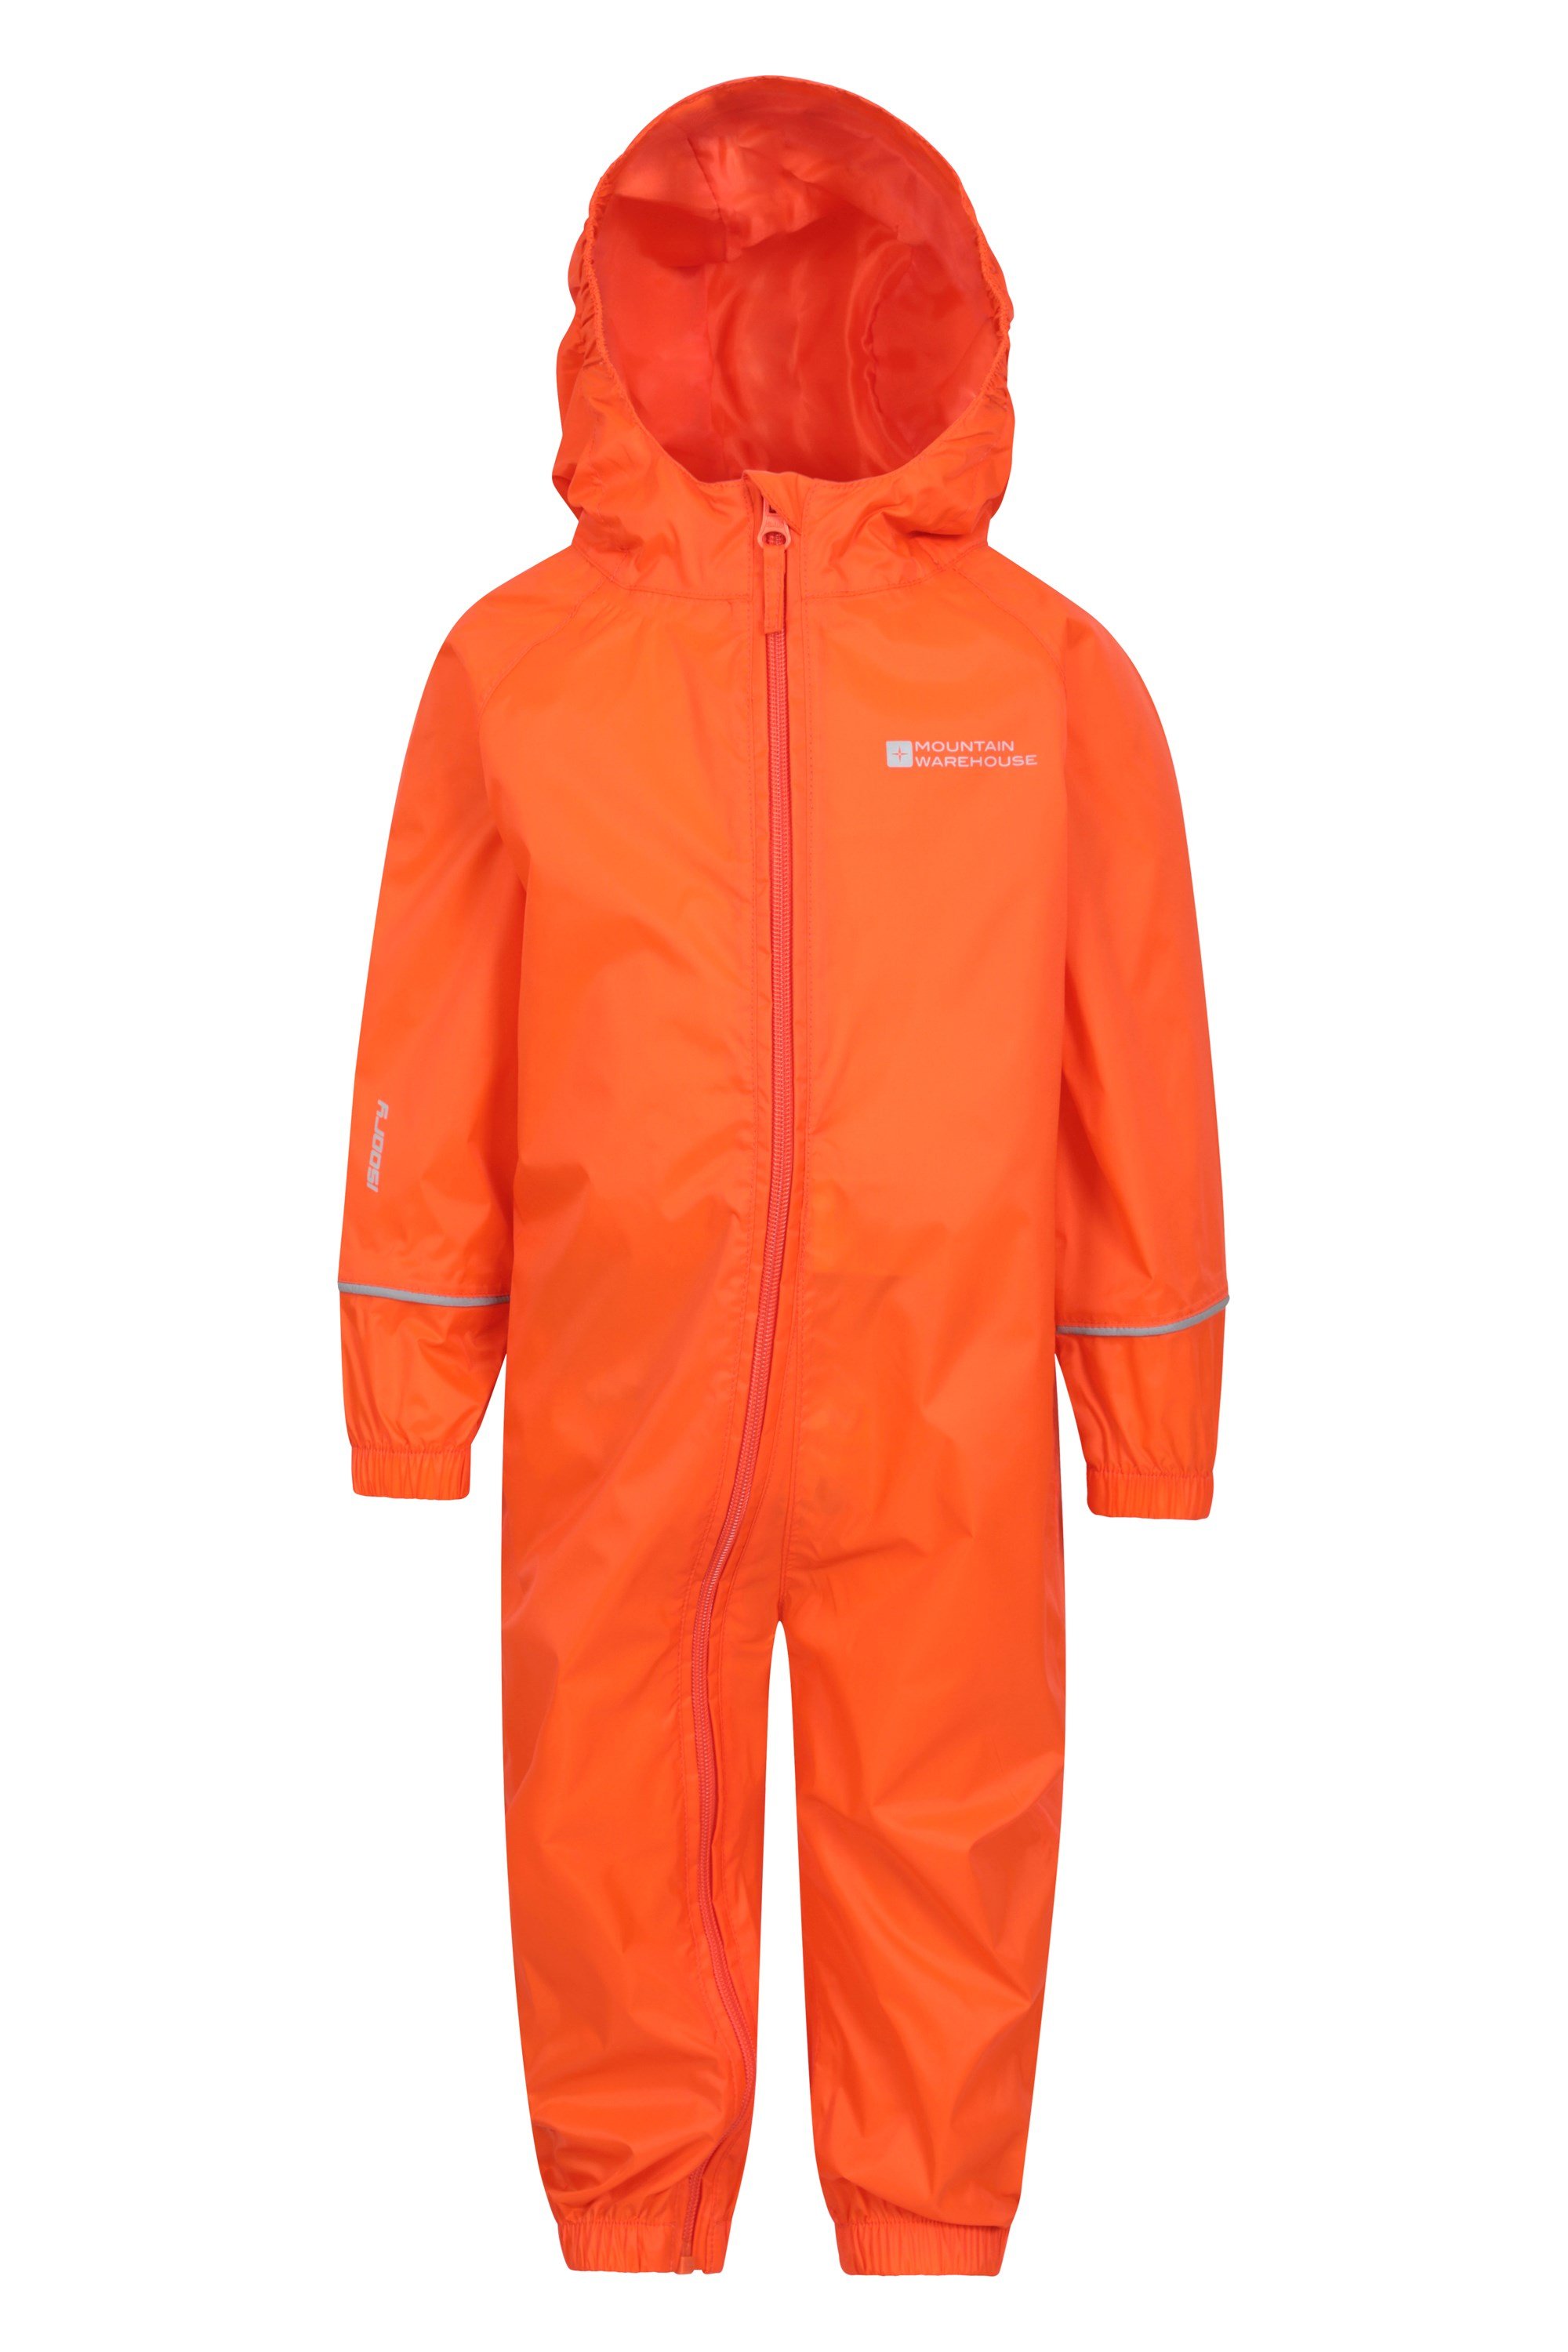 Puddle Kids Waterproof Rain Suit - Orange